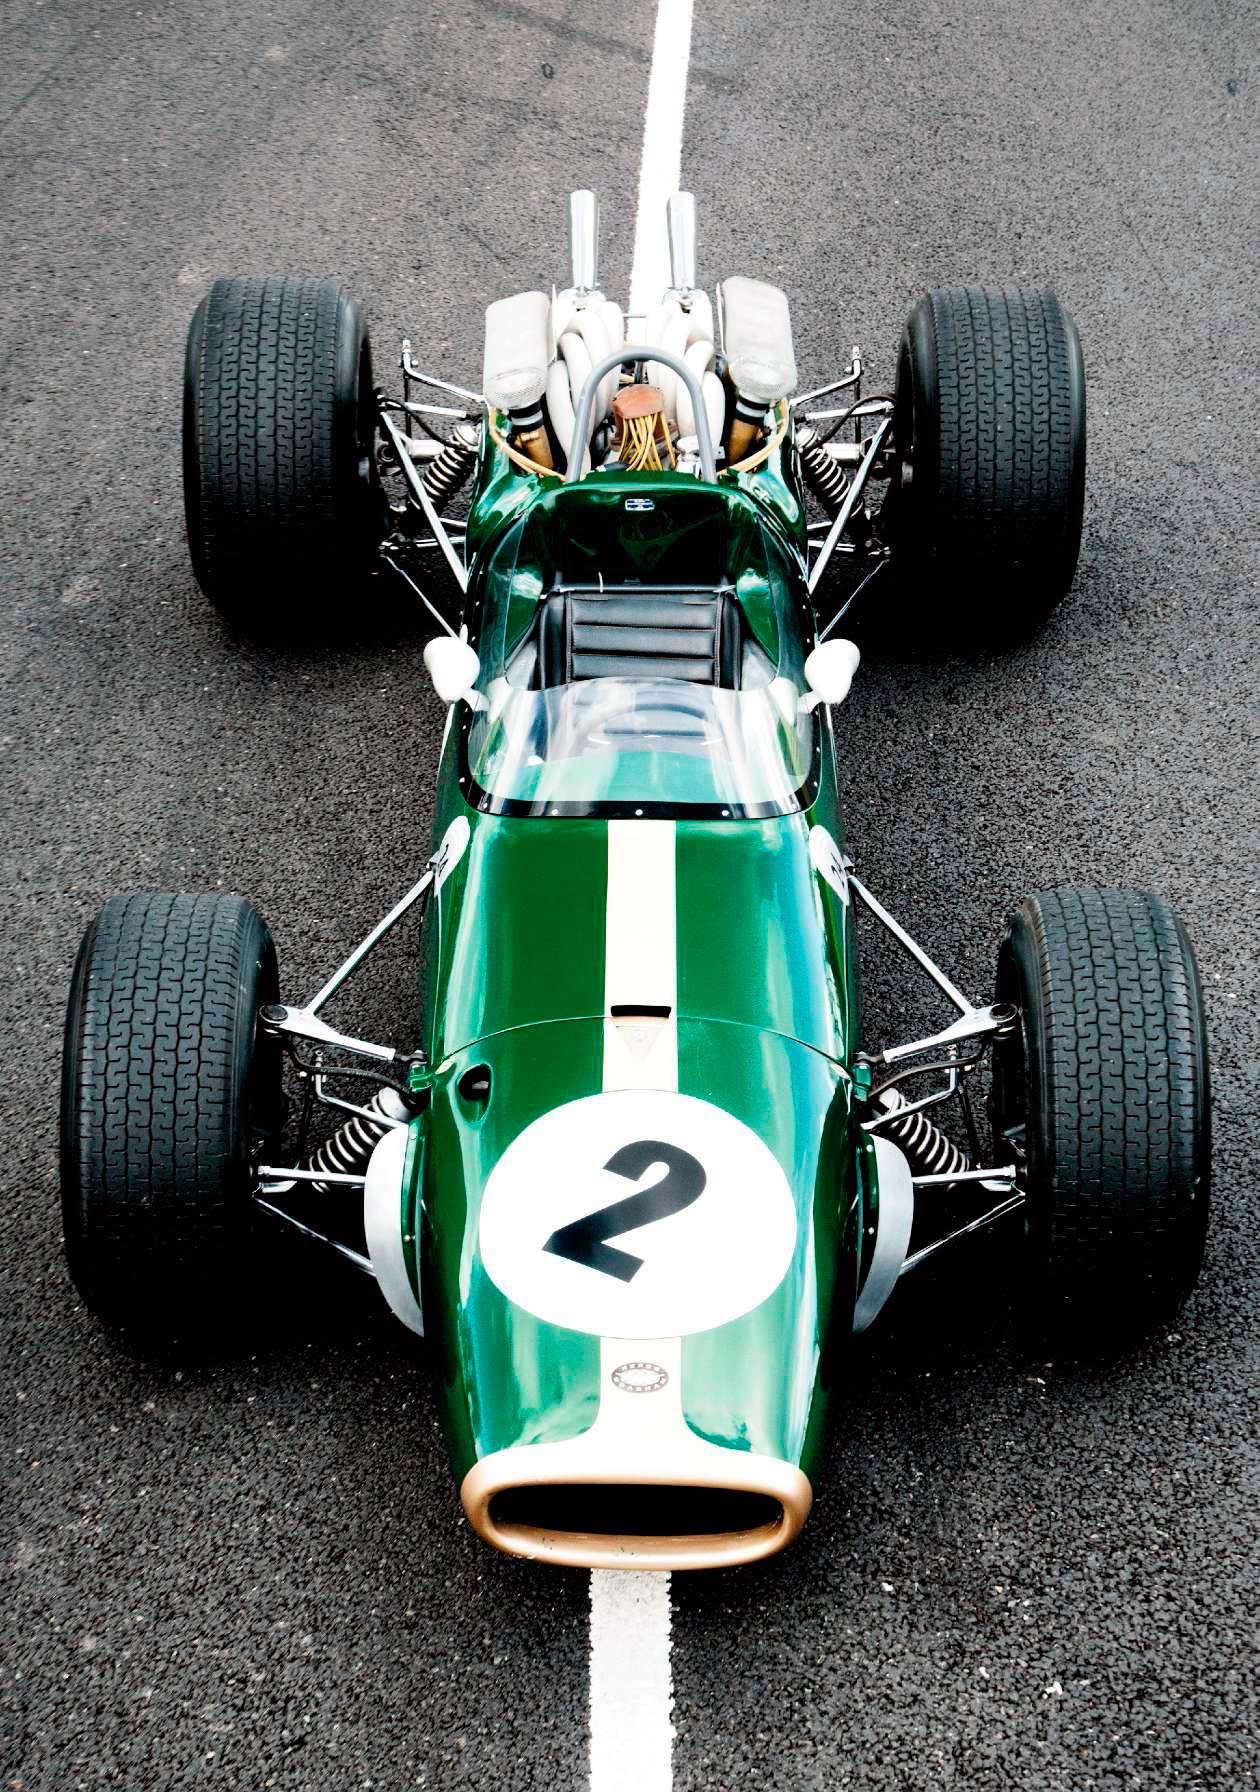 1967 Brabham BT24/2 driven